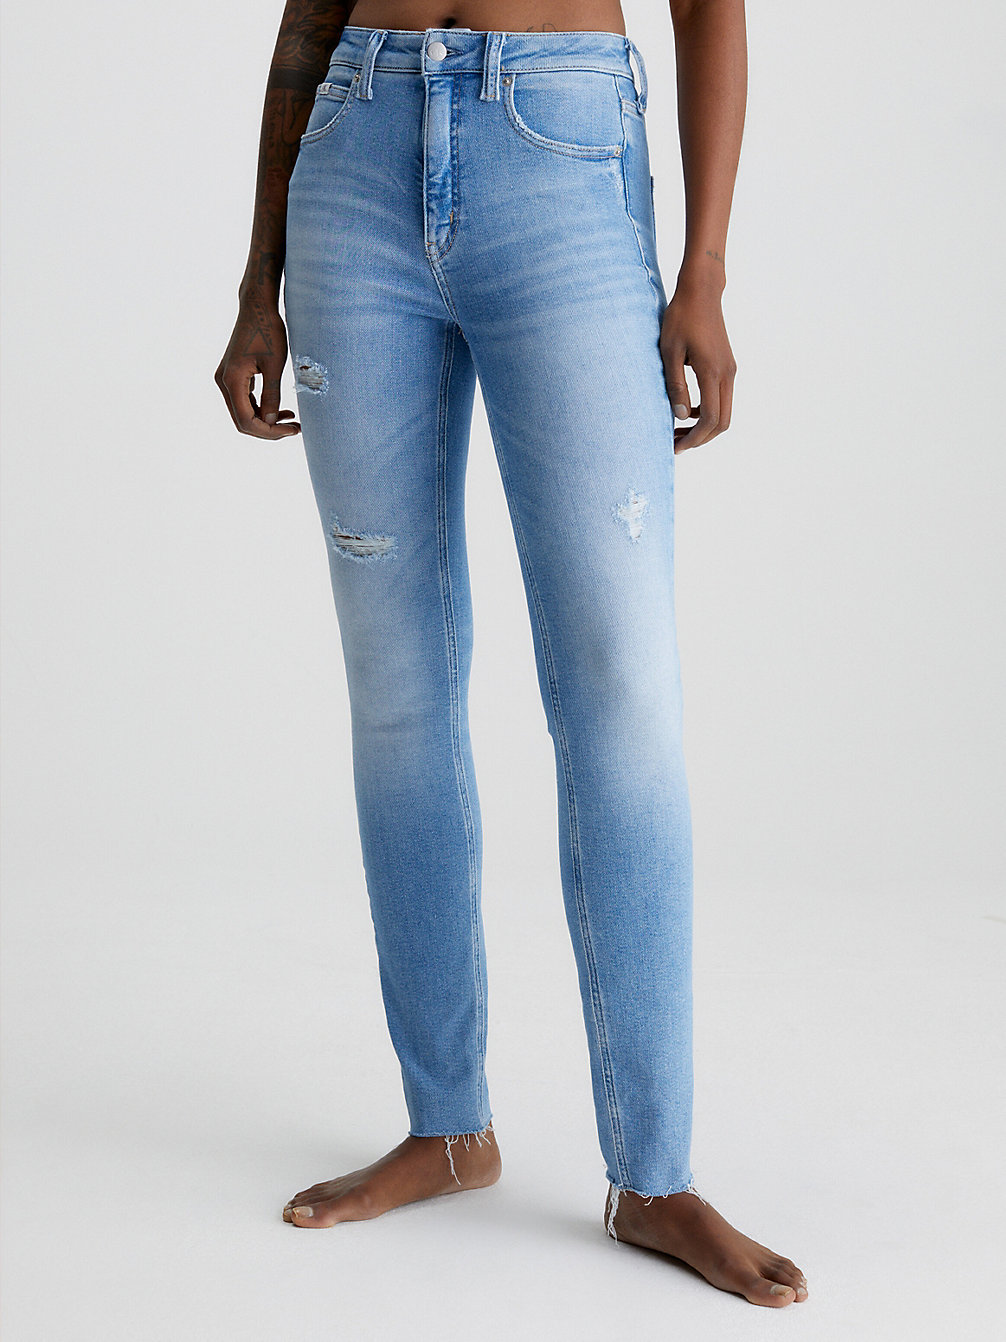 Women's Skinny Jeans | Ripped Skinny Jeans | Calvin Klein®